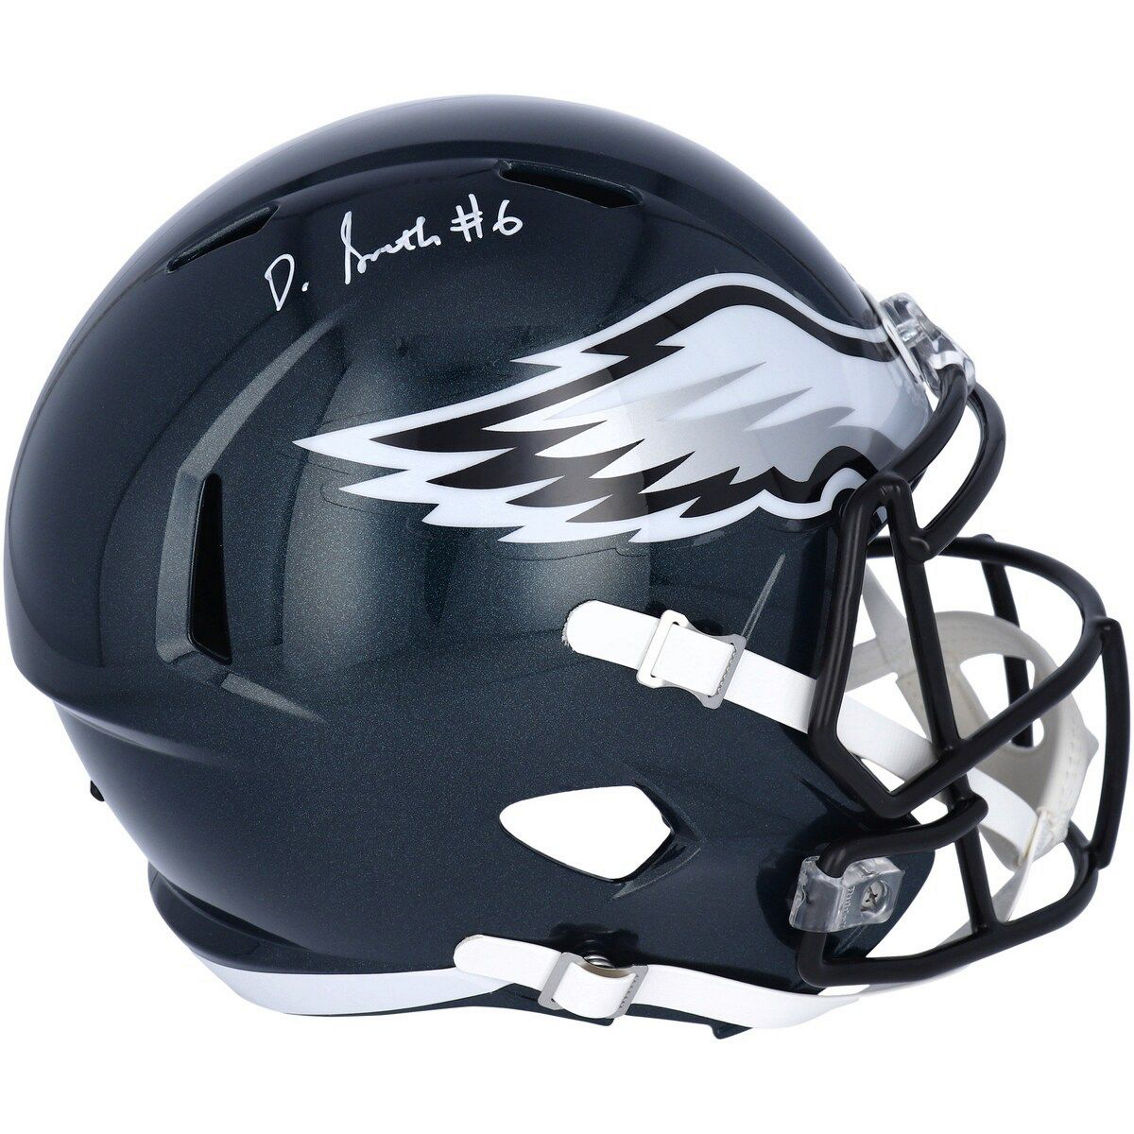 Fanatics Authentic DeVonta Smith Philadelphia Eagles Autographed Riddell Speed Replica Helmet - Image 2 of 3